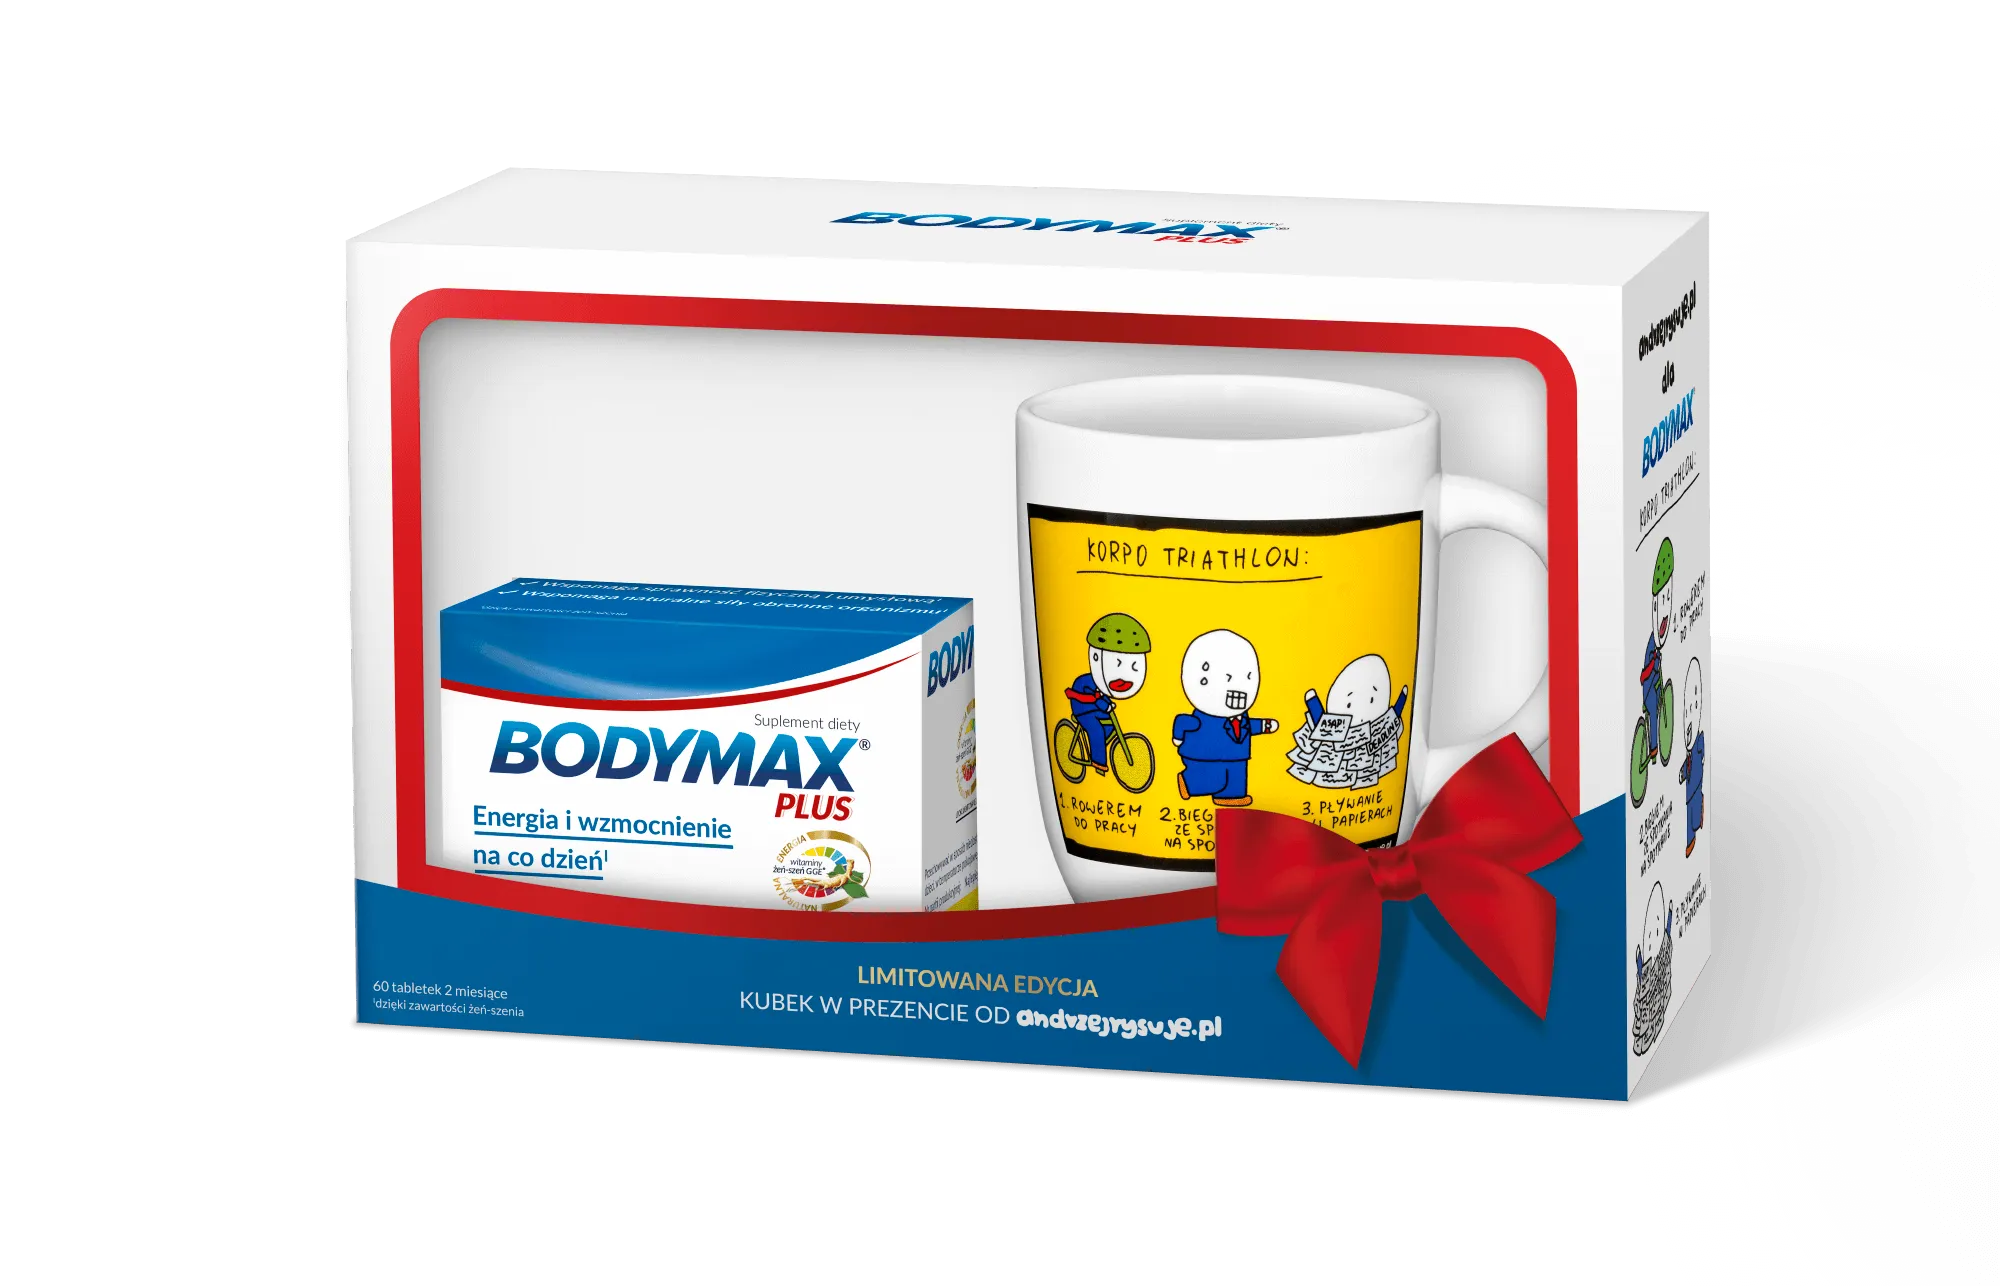 Bodymax Plus, suplement diety, 60 tabletek + kubek w prezencie